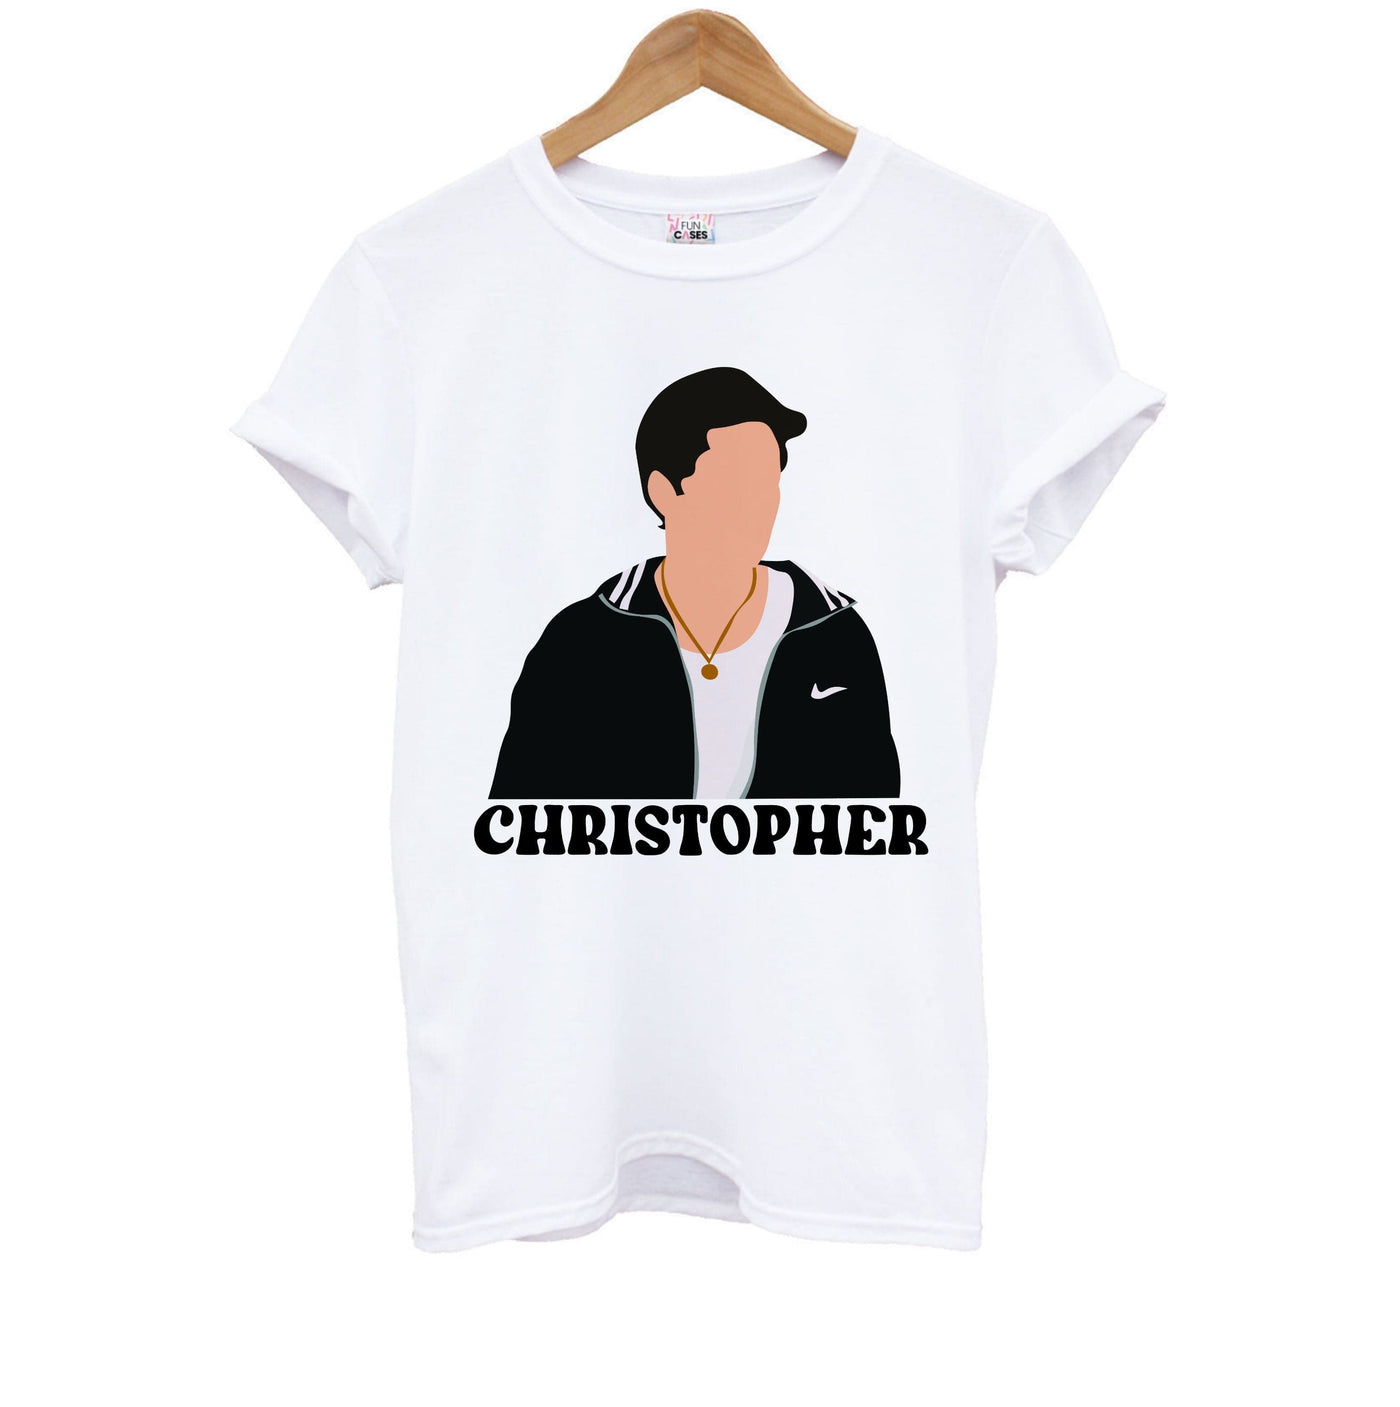 Cristopher - The Sopranos Kids T-Shirt